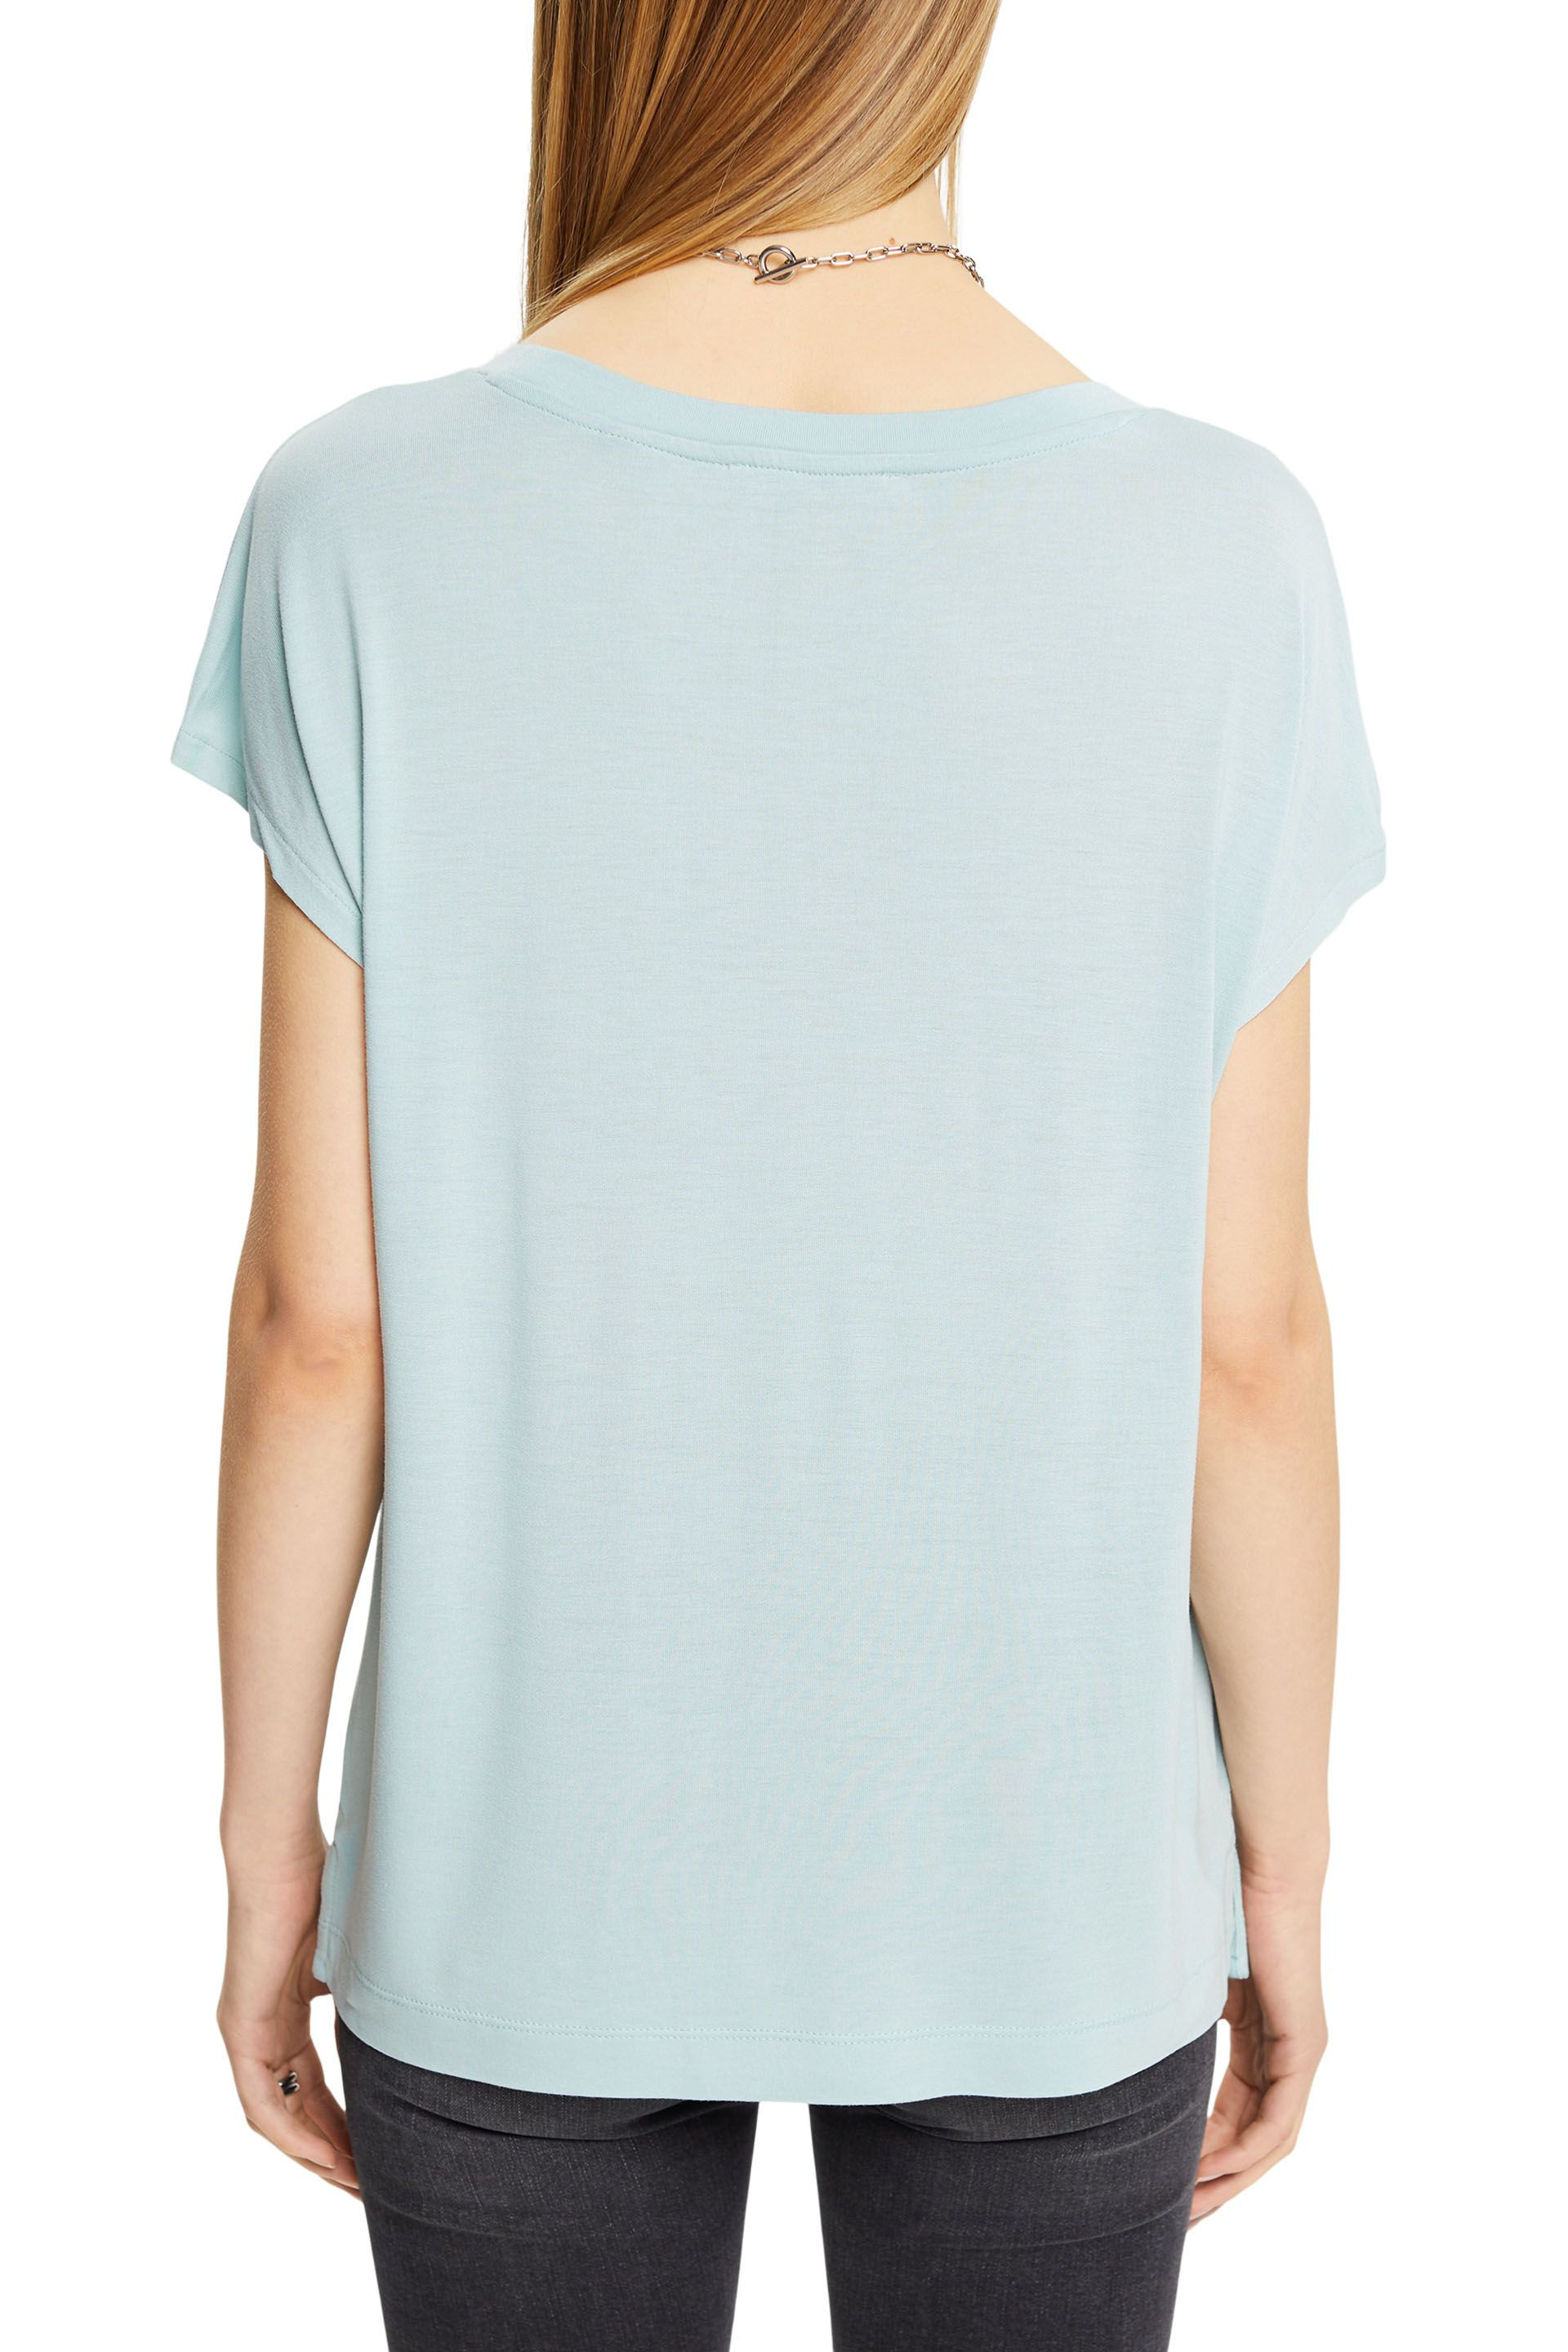 Esprit - T-shirt with sequin lettering, Light Blue, large image number 2